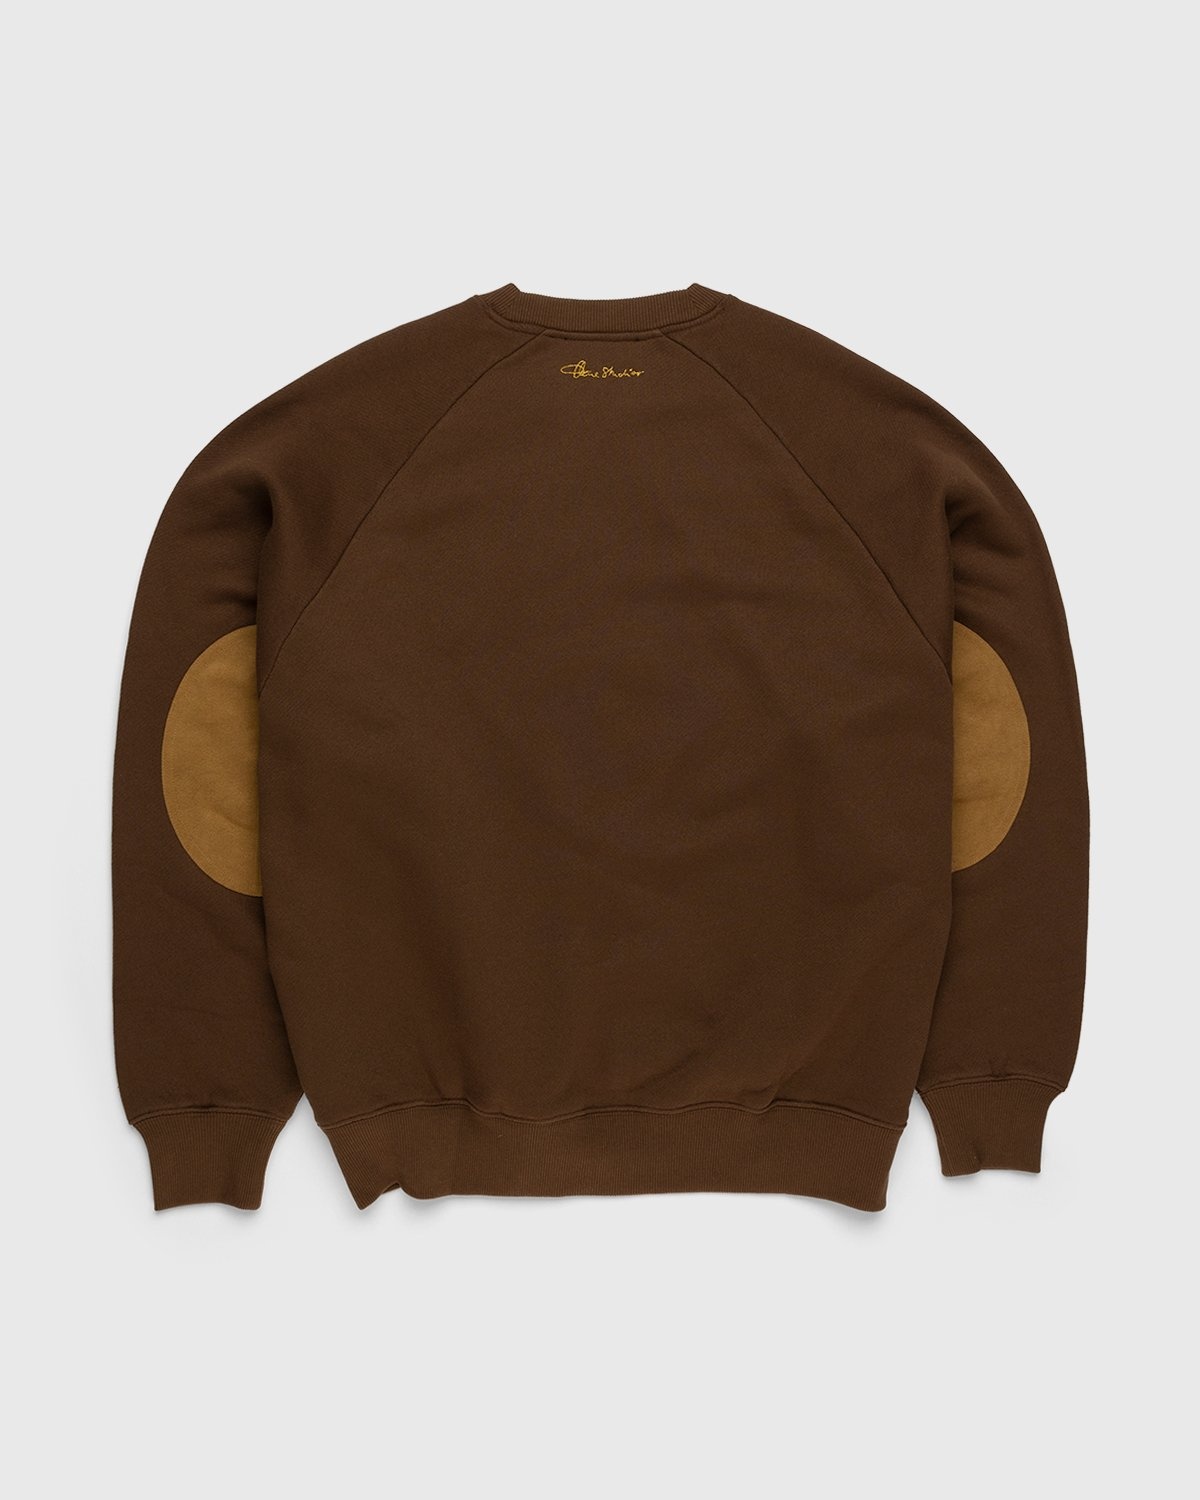 Acne Studios – Sweater Brown - Knitwear - Brown - Image 2